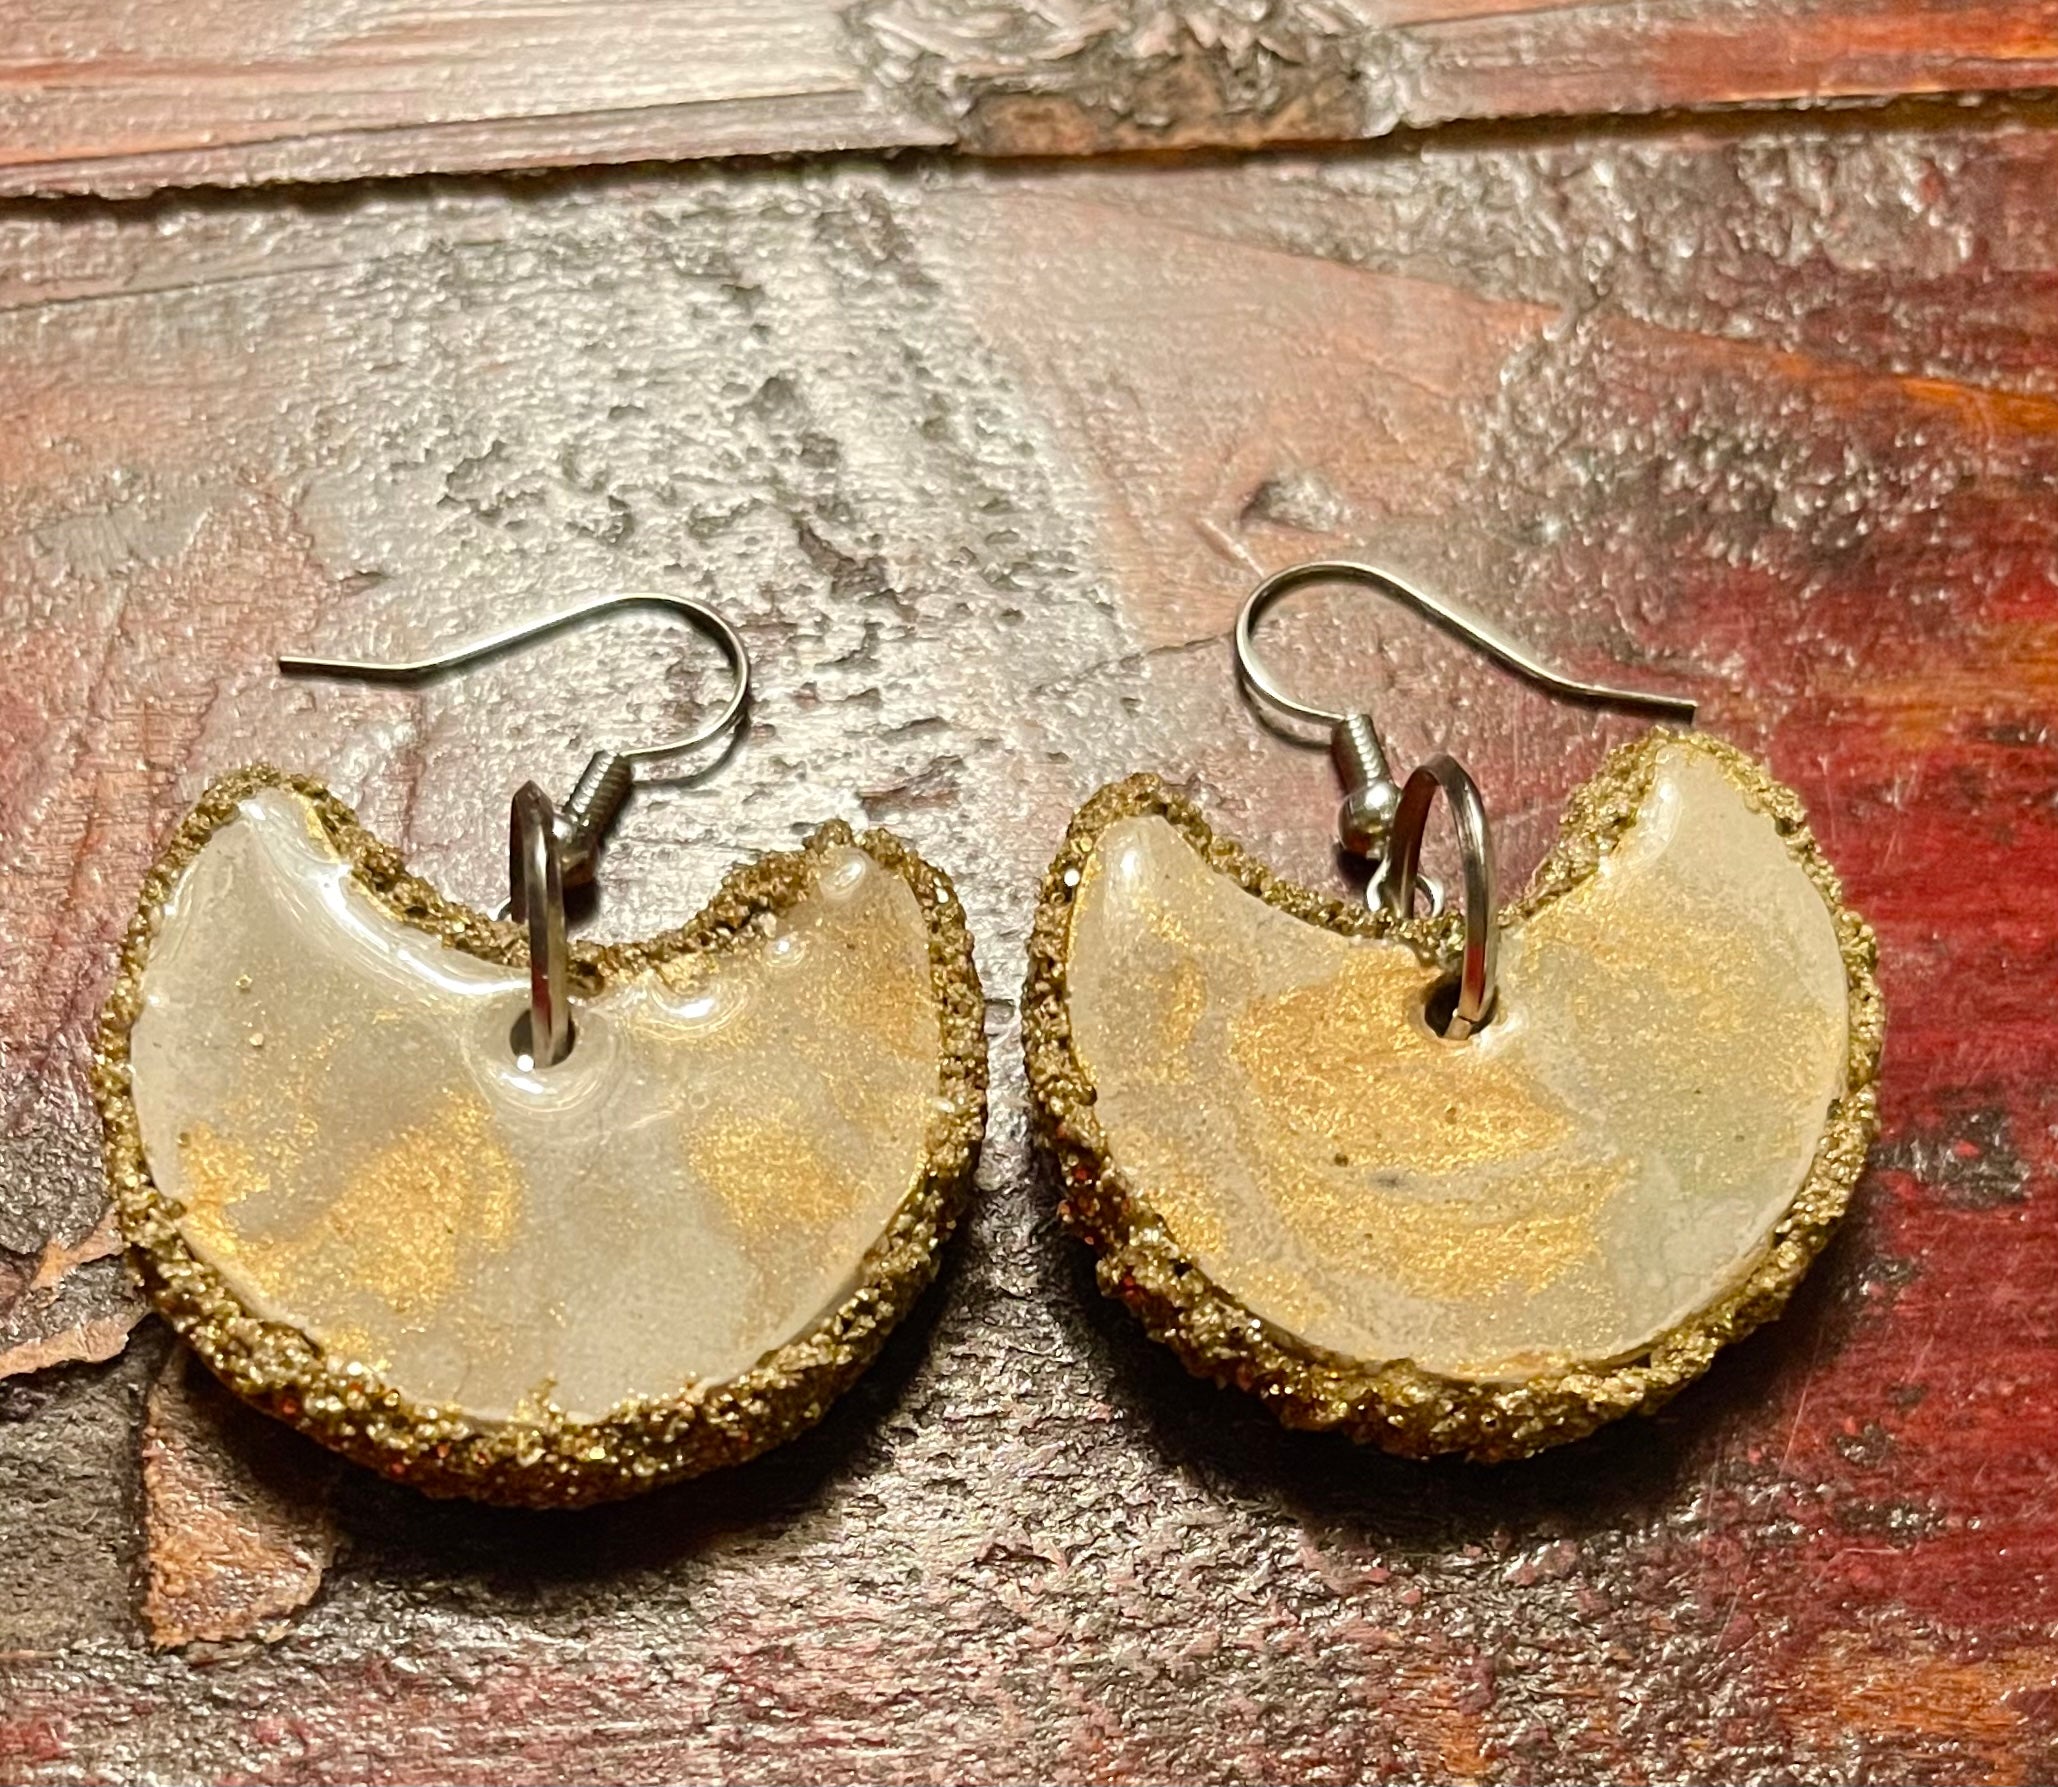 Lunar landing earrings